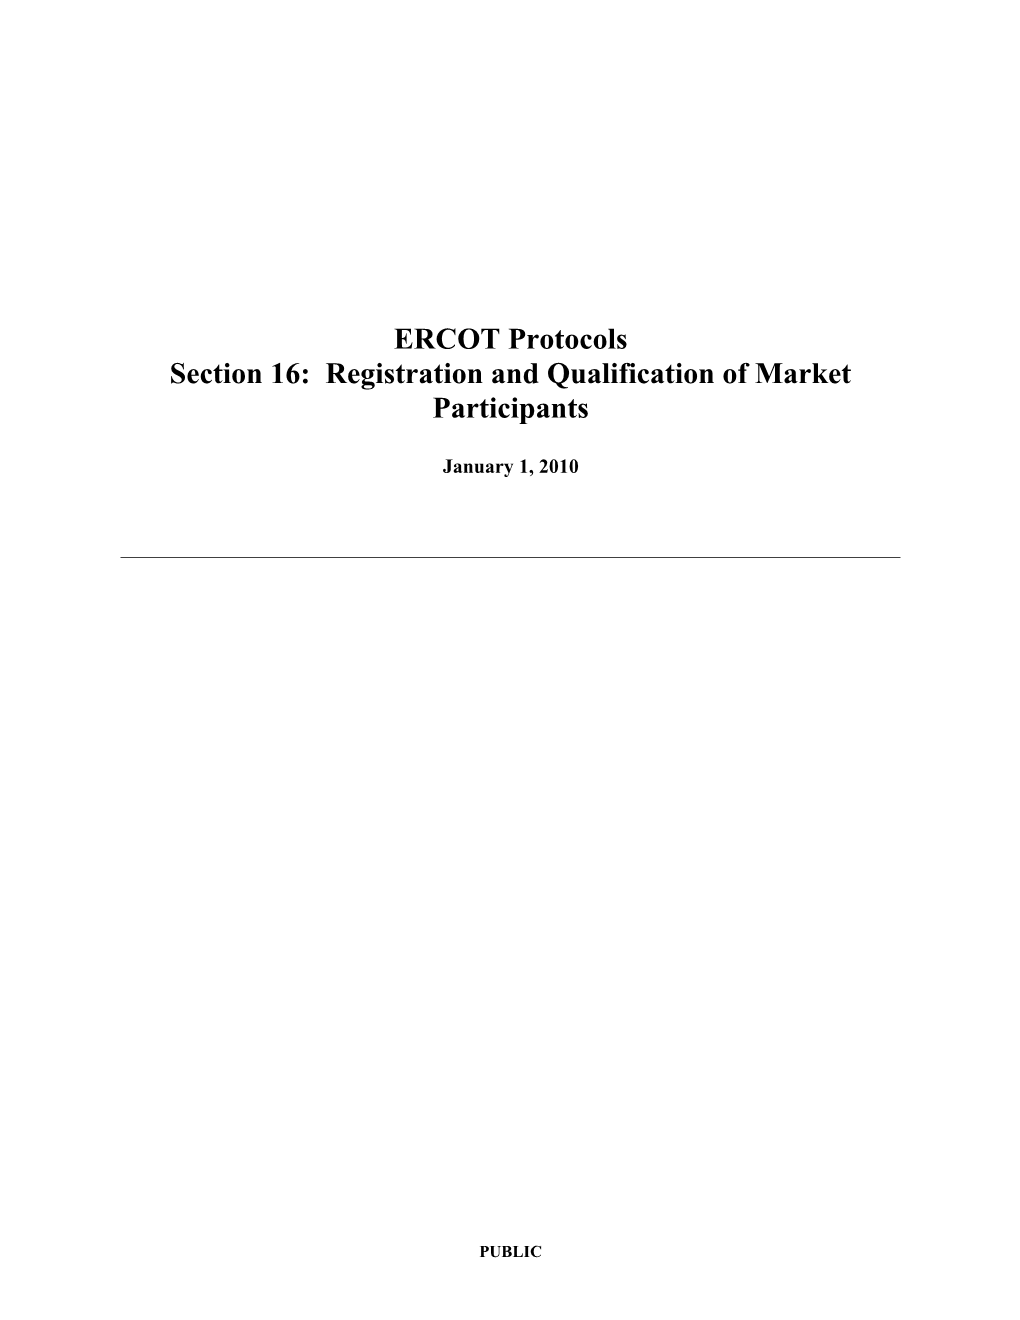 Registration and Qualification of Market Participants